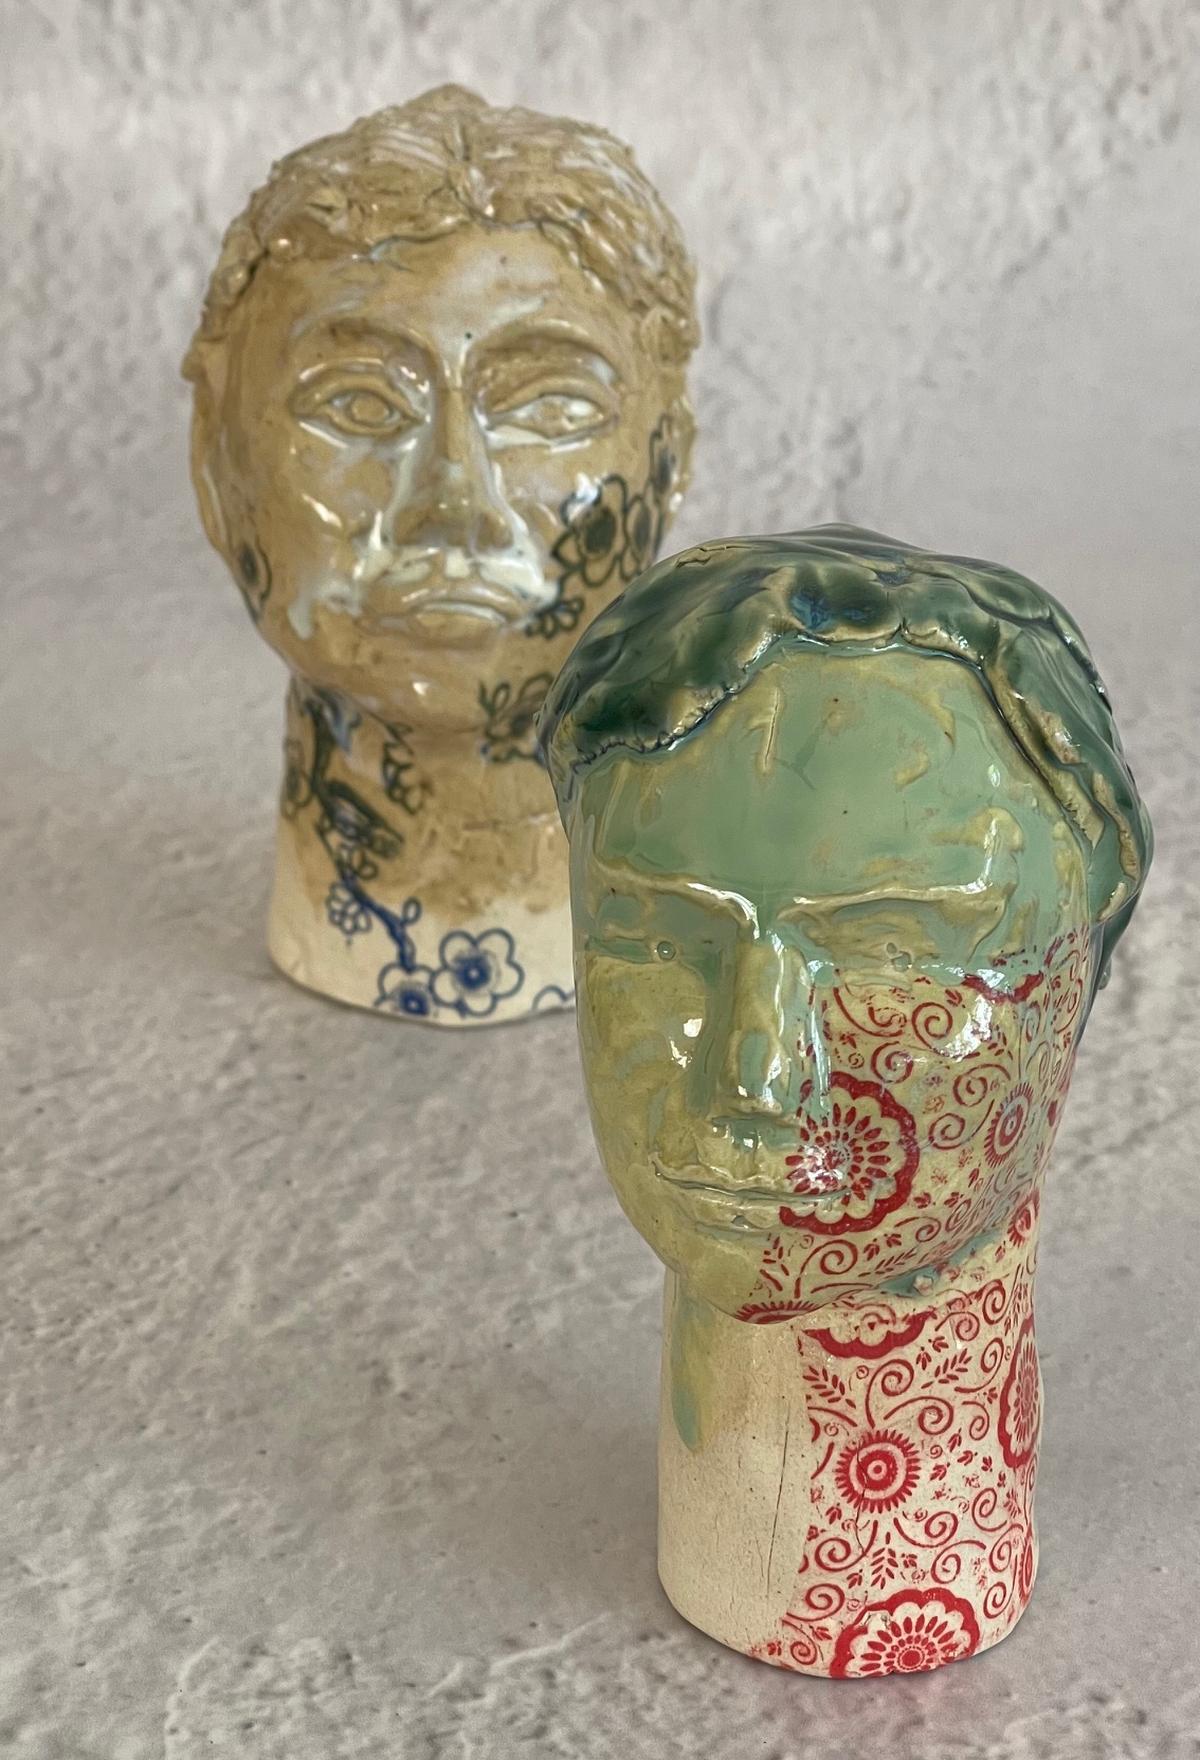 A pair of ceramic heads